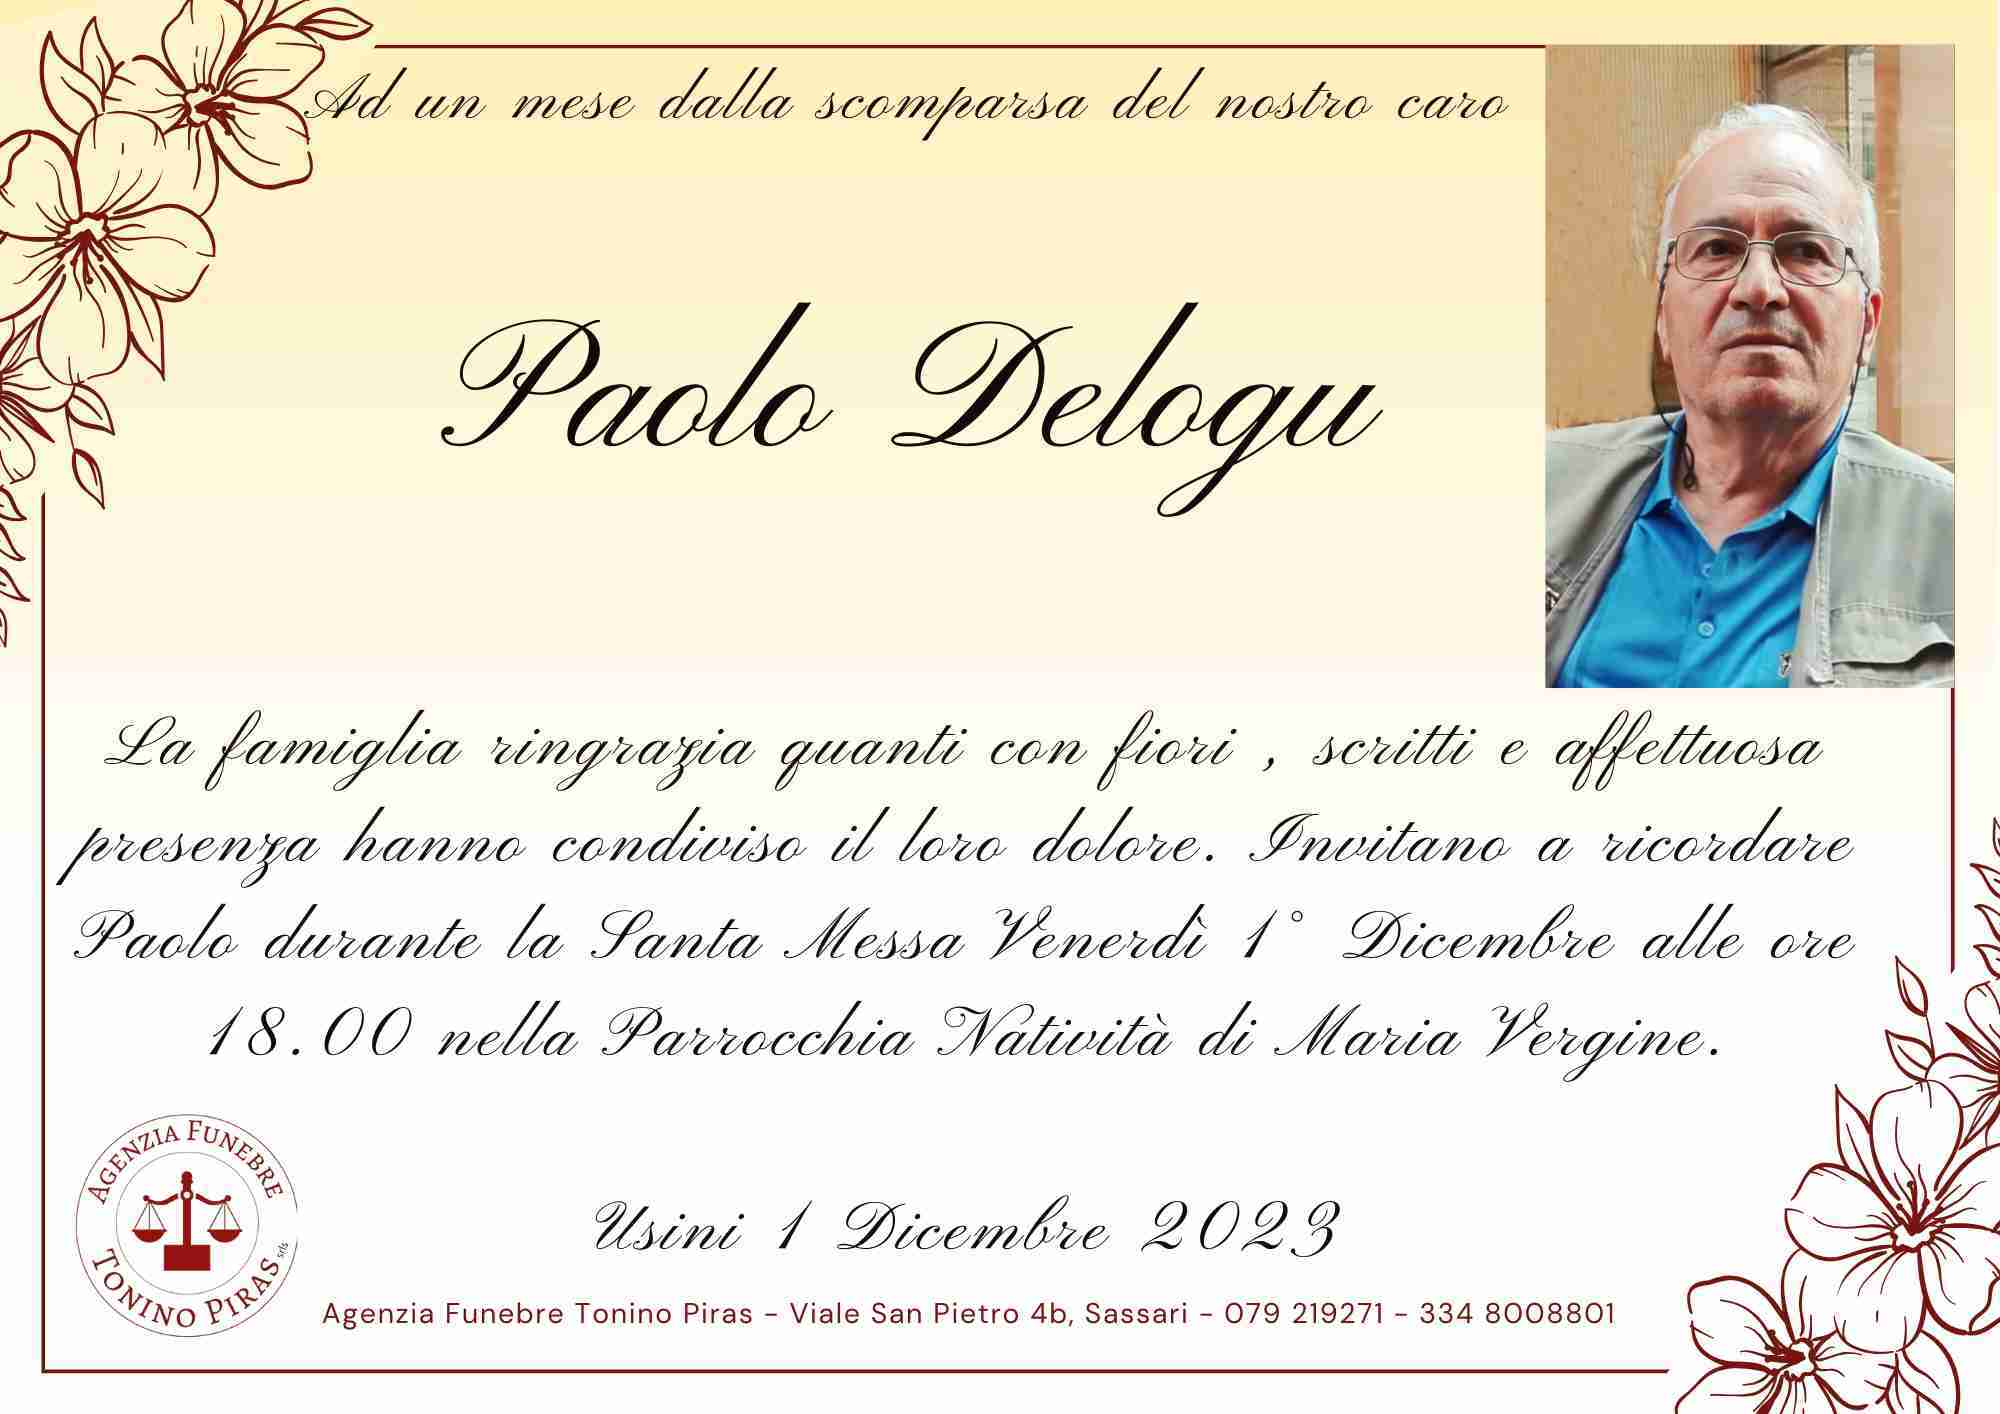 Paolo Delogu